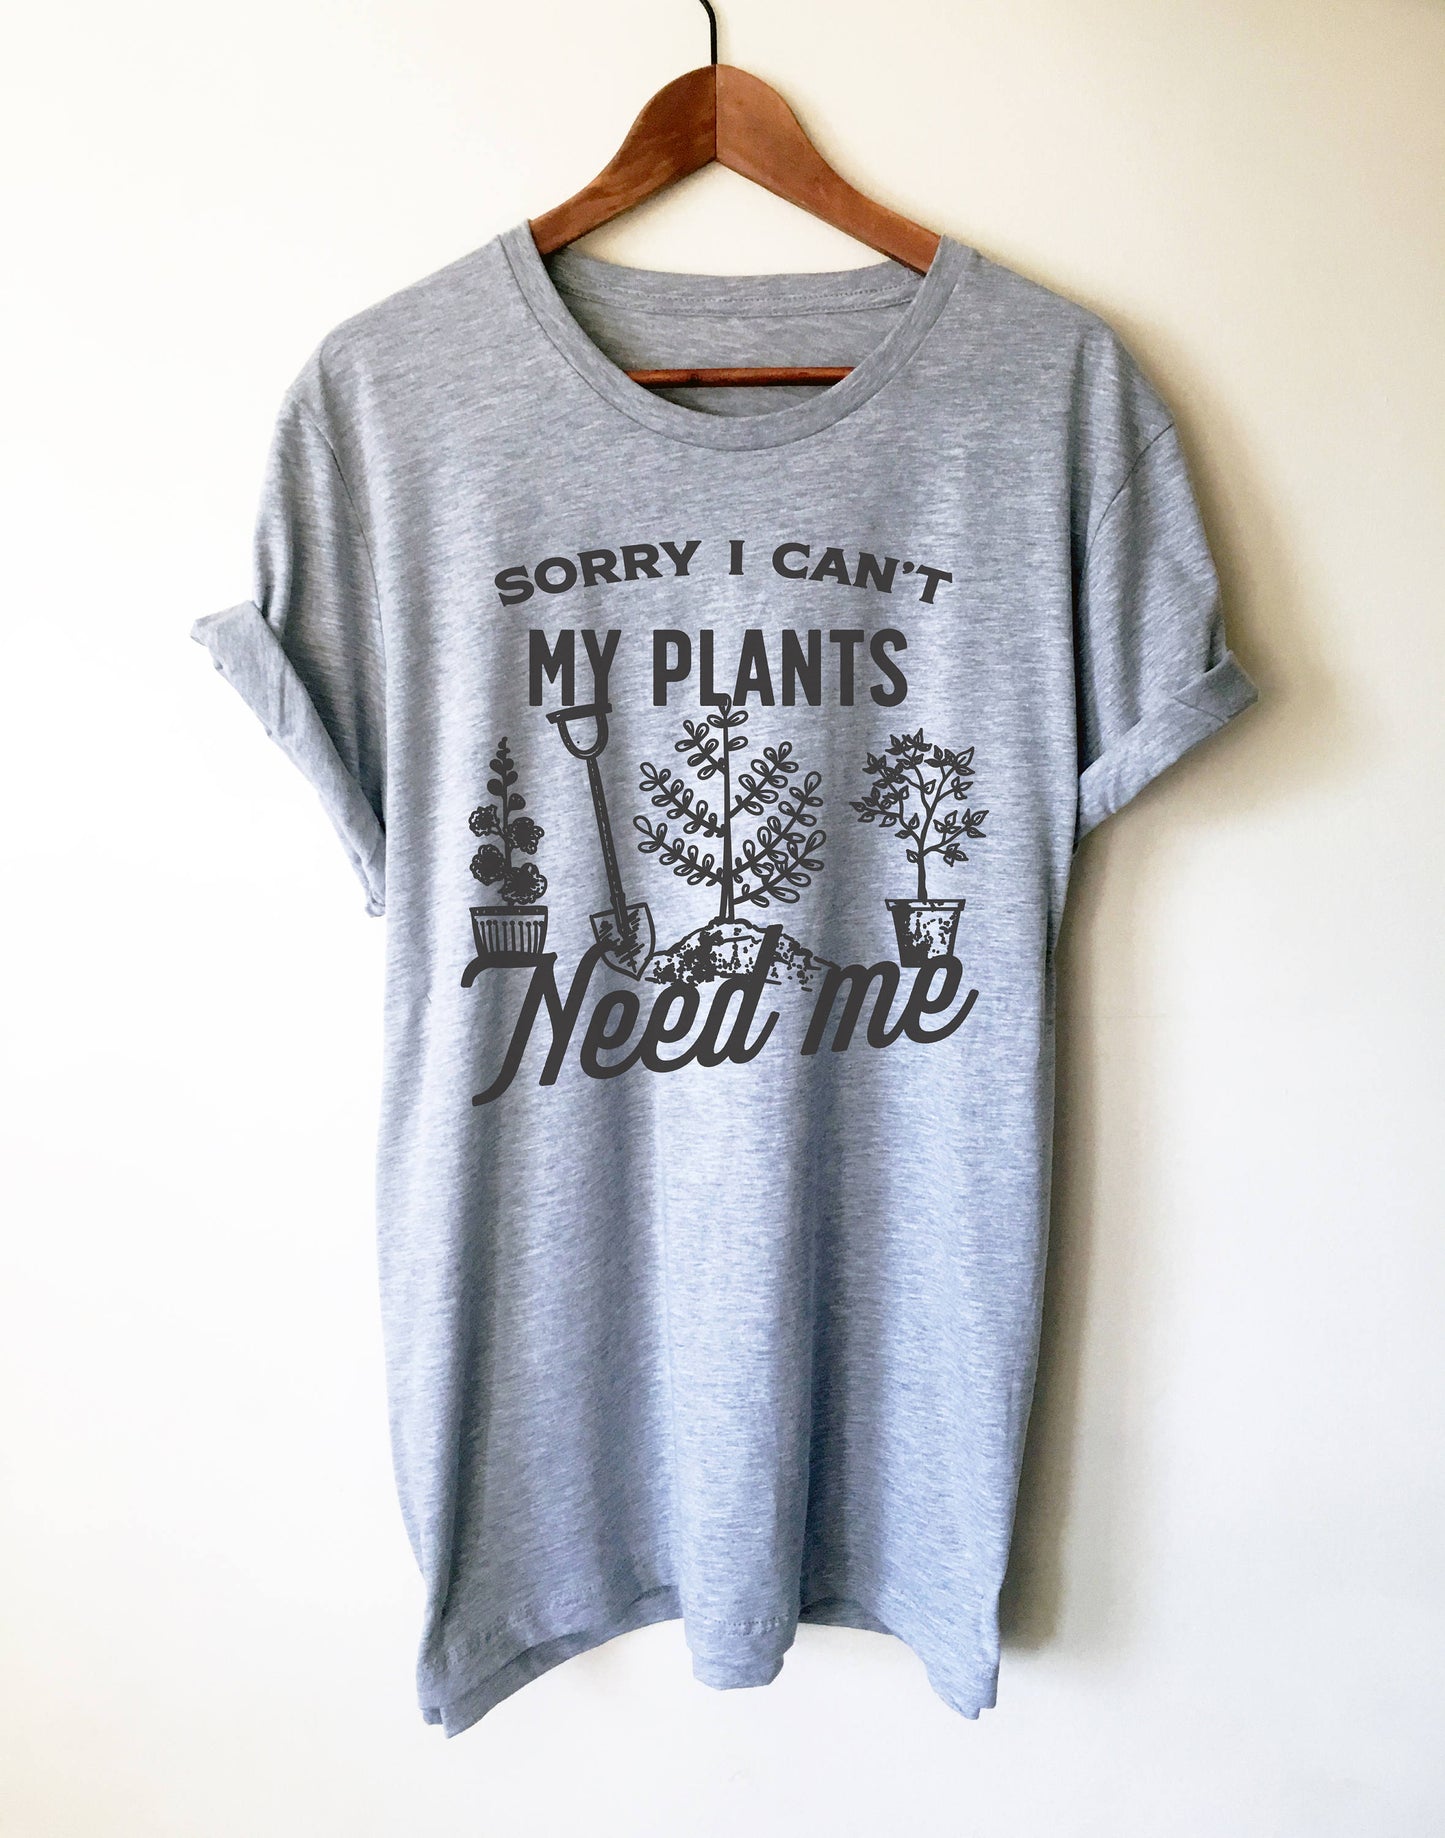 Sorry I Can't My Plants Need Me Unisex Shirt - Gardening Shirt, Gardener Gift, Plant Shirt, Funny Sayings, Novelty Gift, Graphic T-Shirt